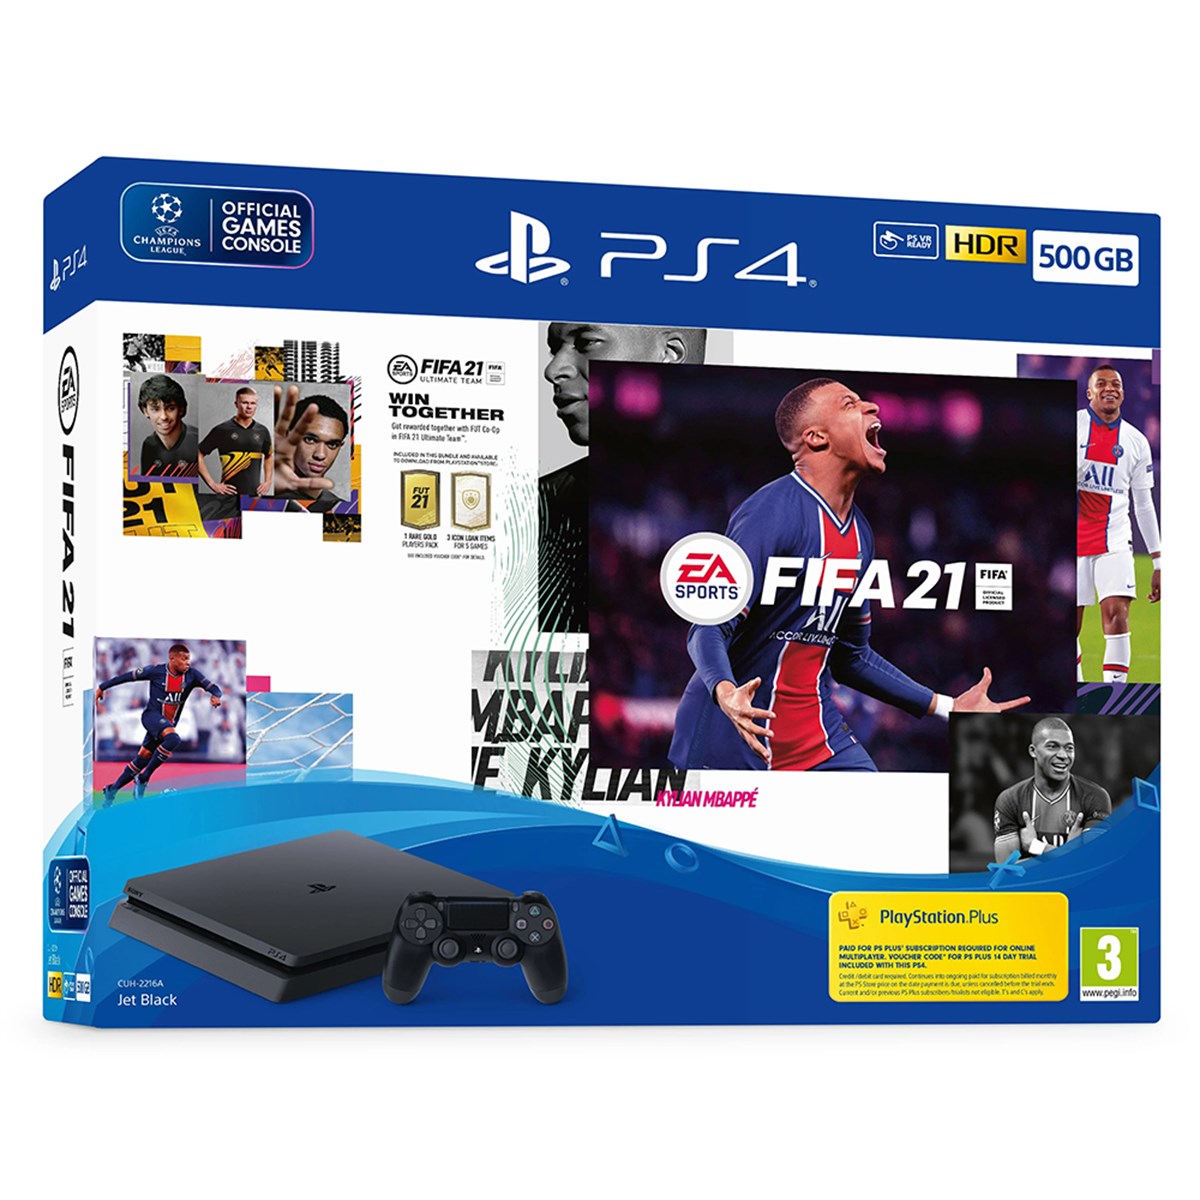 Sony Playstation 4 500 GB Oyun Konsolu + FIFA 2021 + 2 PS4 Kol